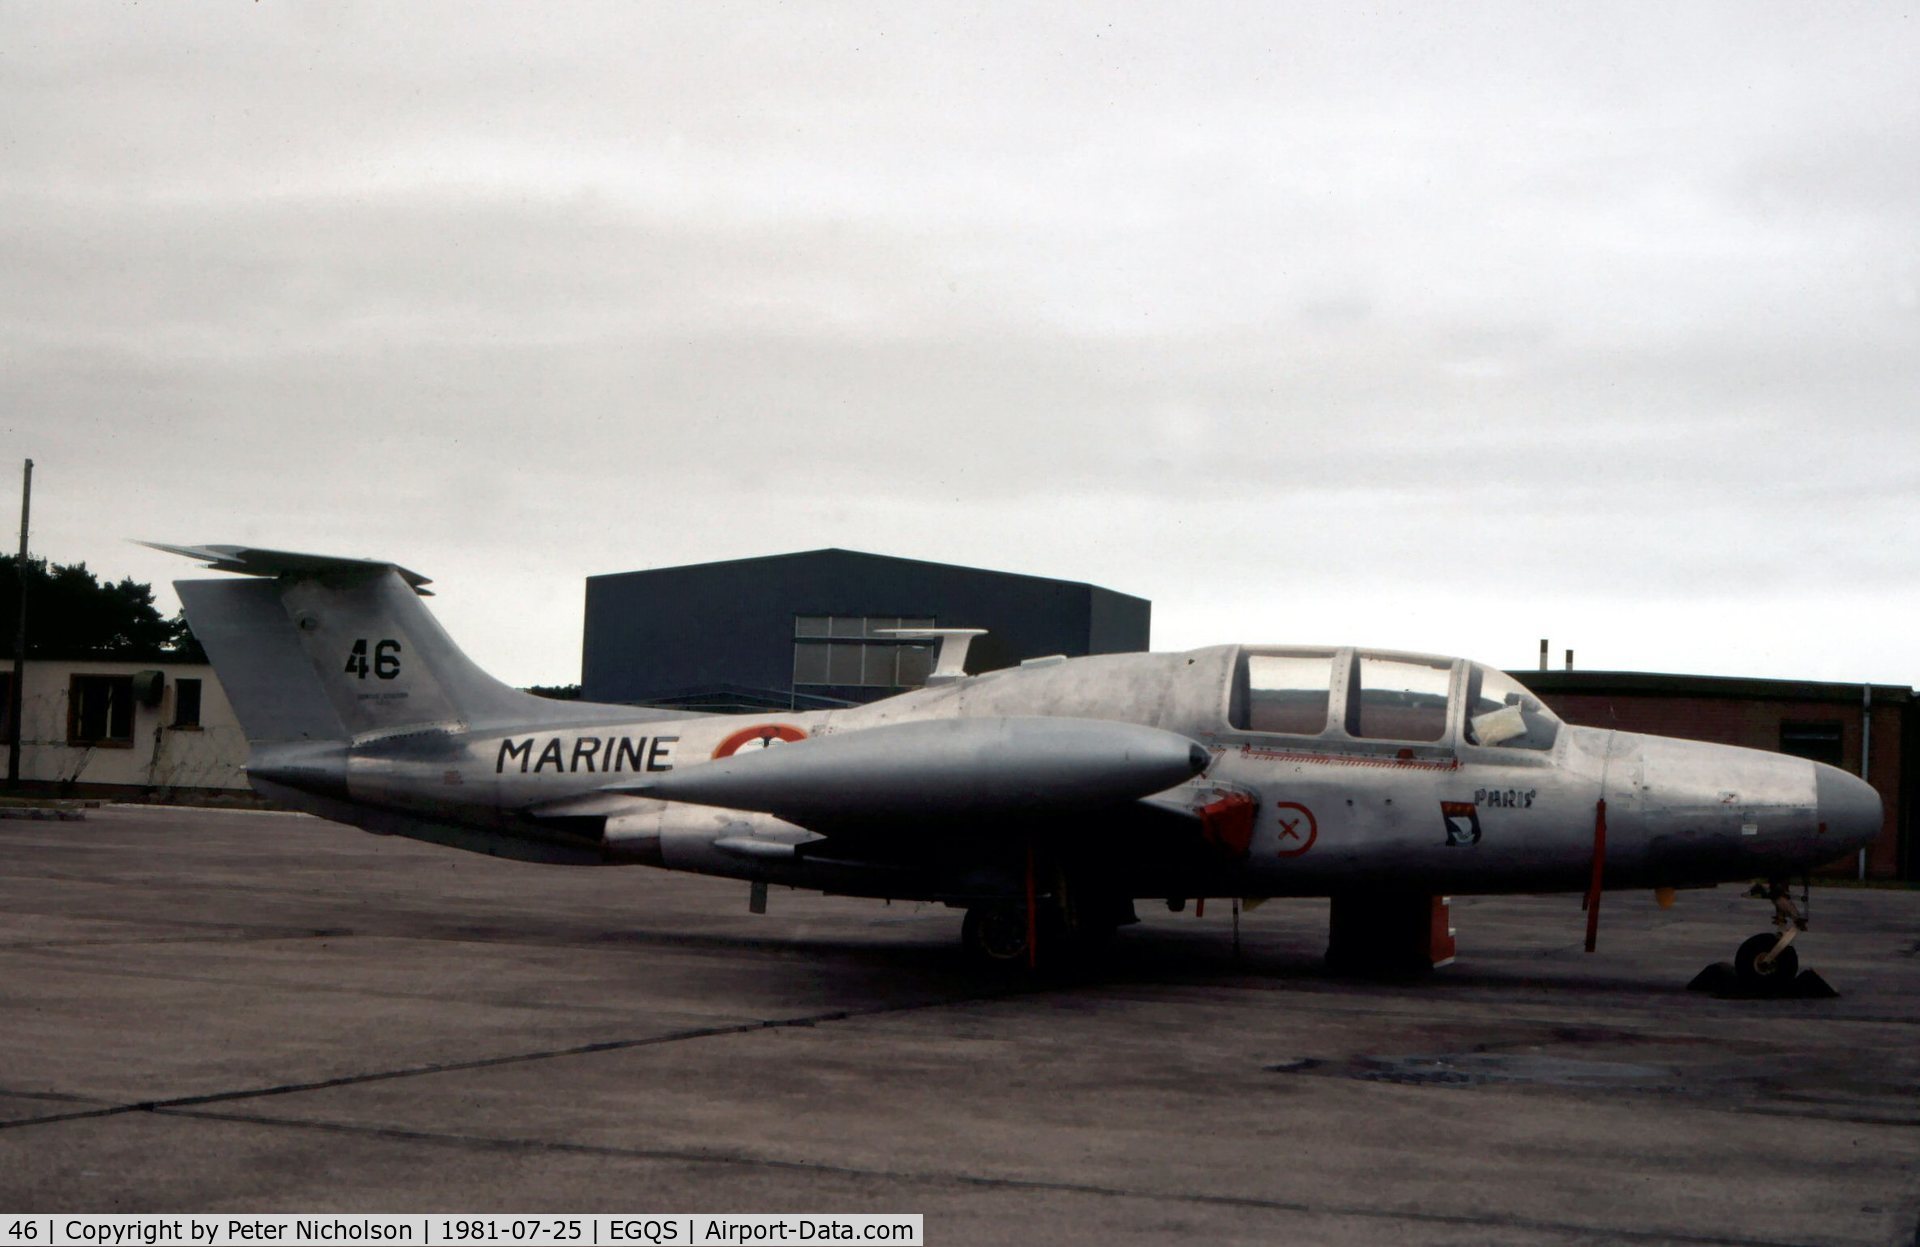 46, Morane-Saulnier MS.760 Paris C/N 46, MS.760 Paris of Aeronavale's SRL unit on display at the 1981 RAF Lossiemouth Airshow.